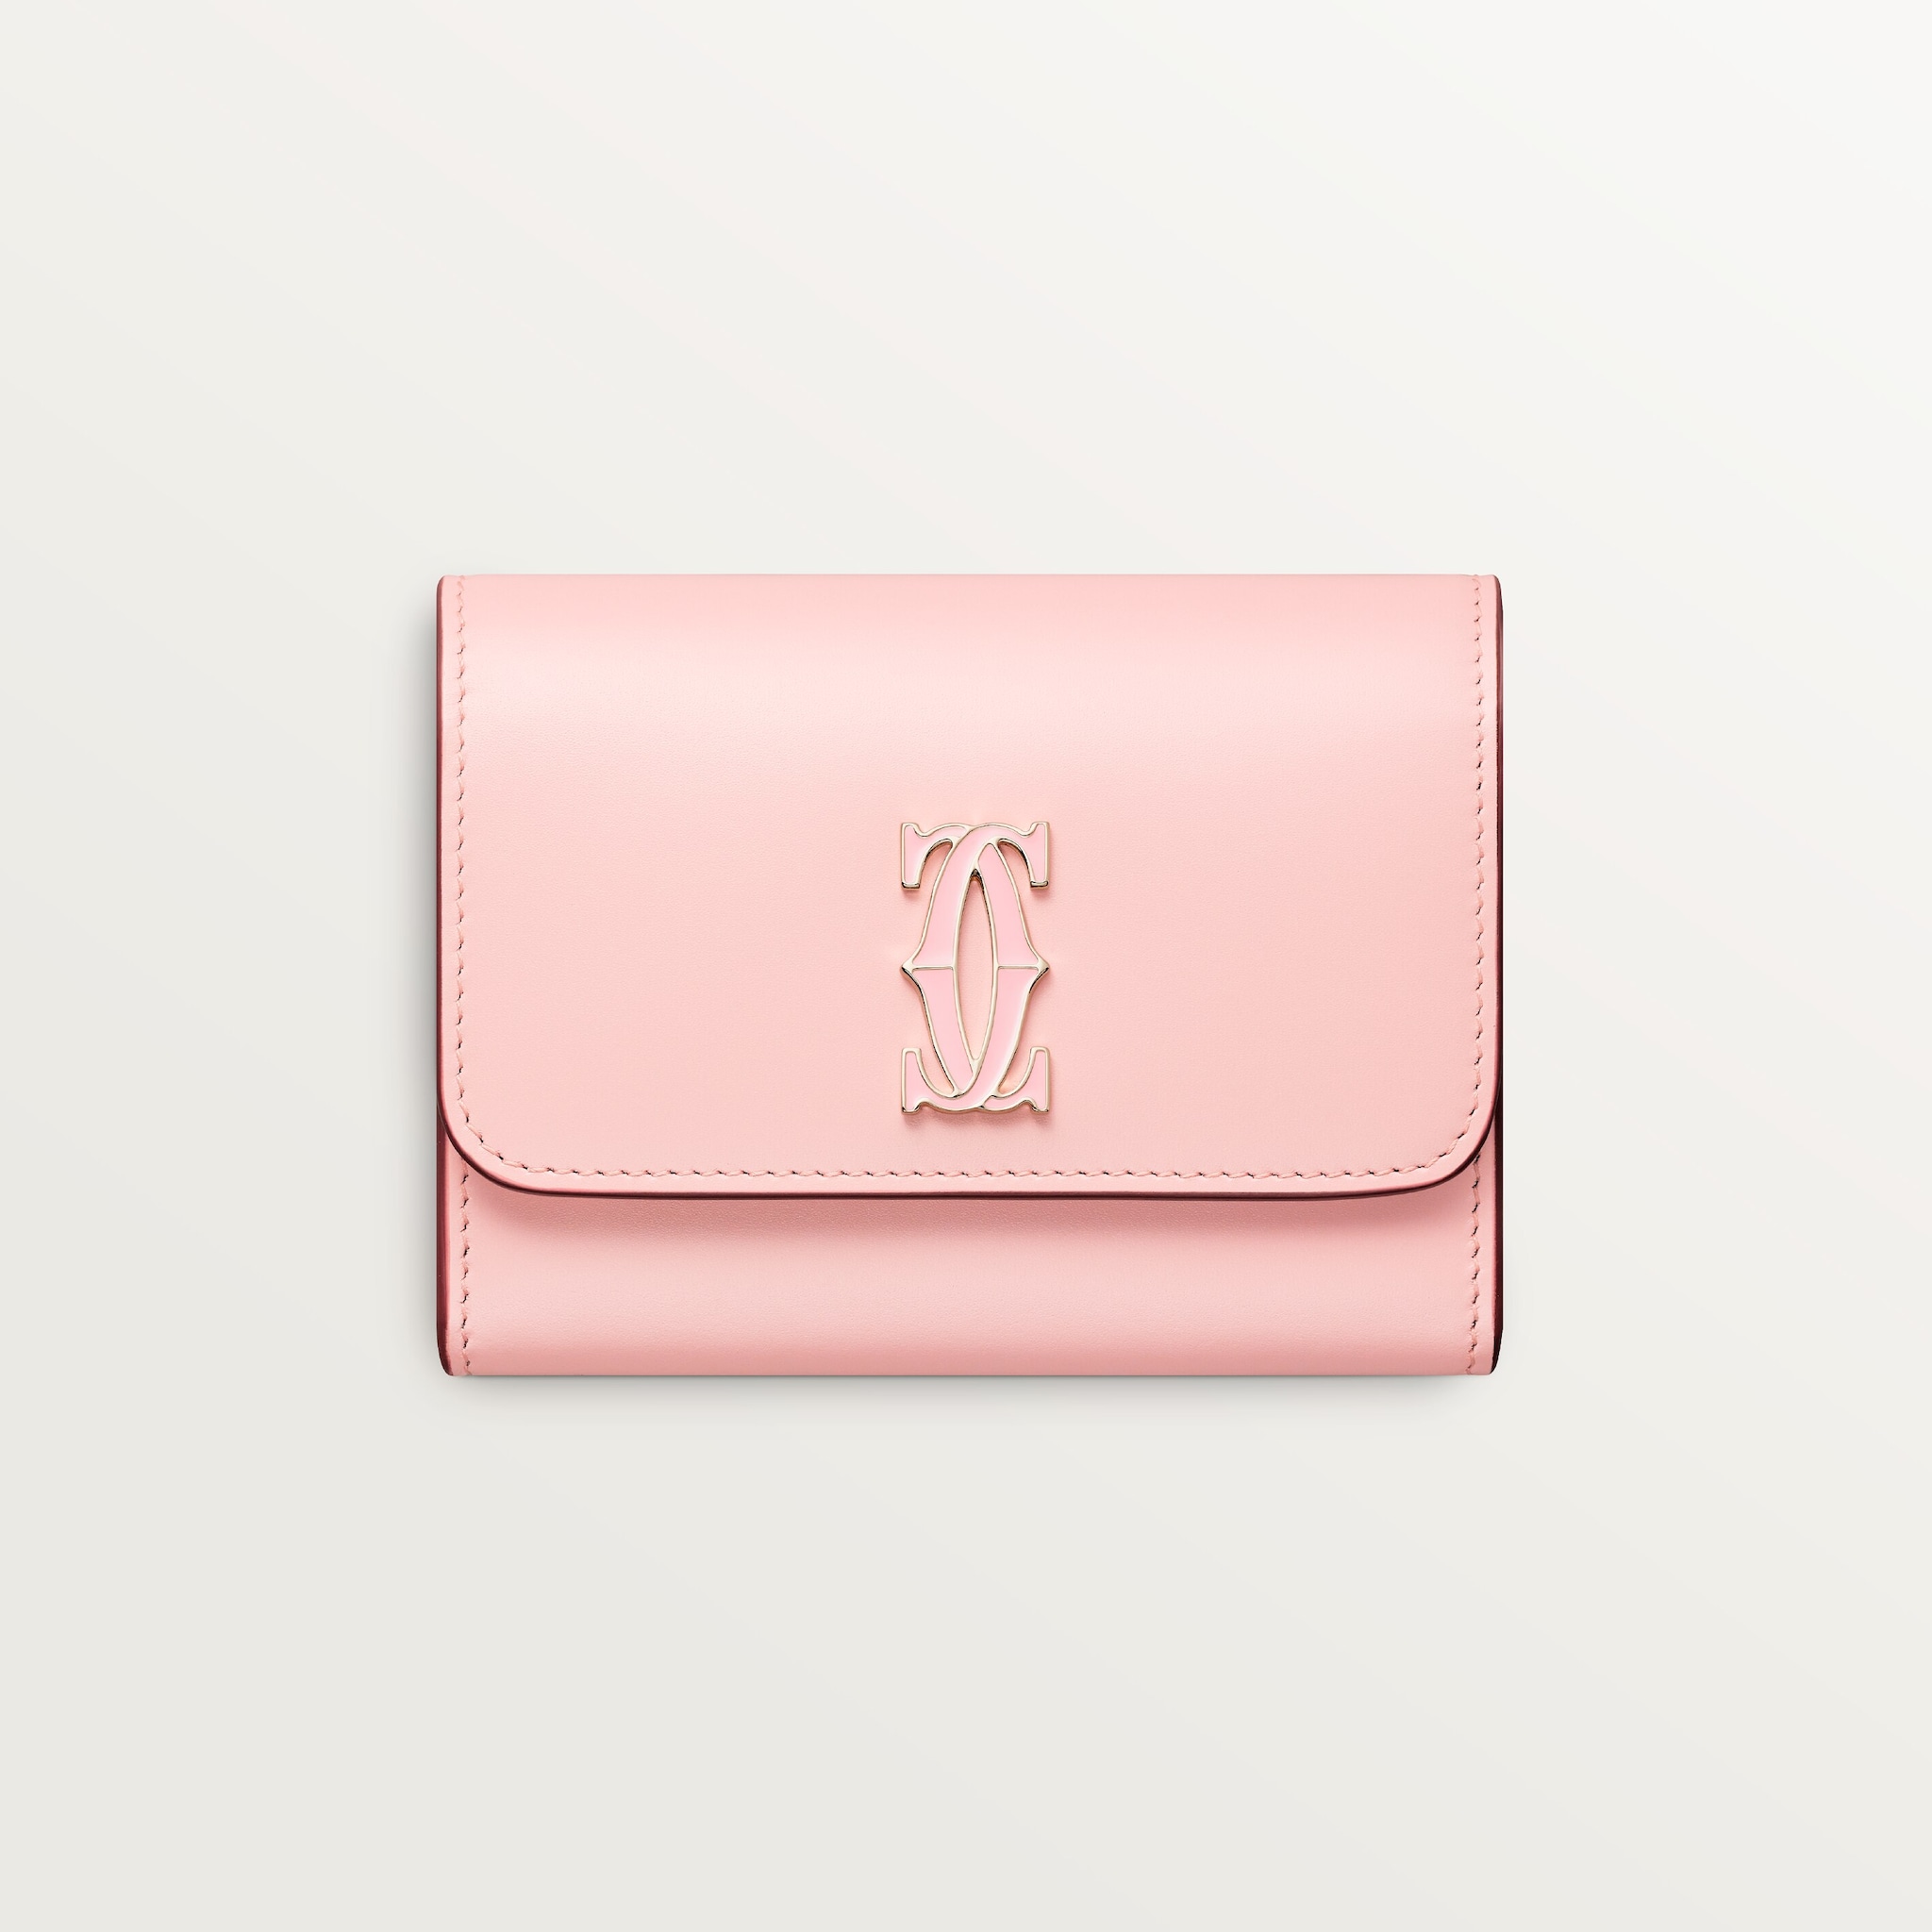 Mini wallet, C de CartierPale pink calfskin, golden and pale pink enamel finish